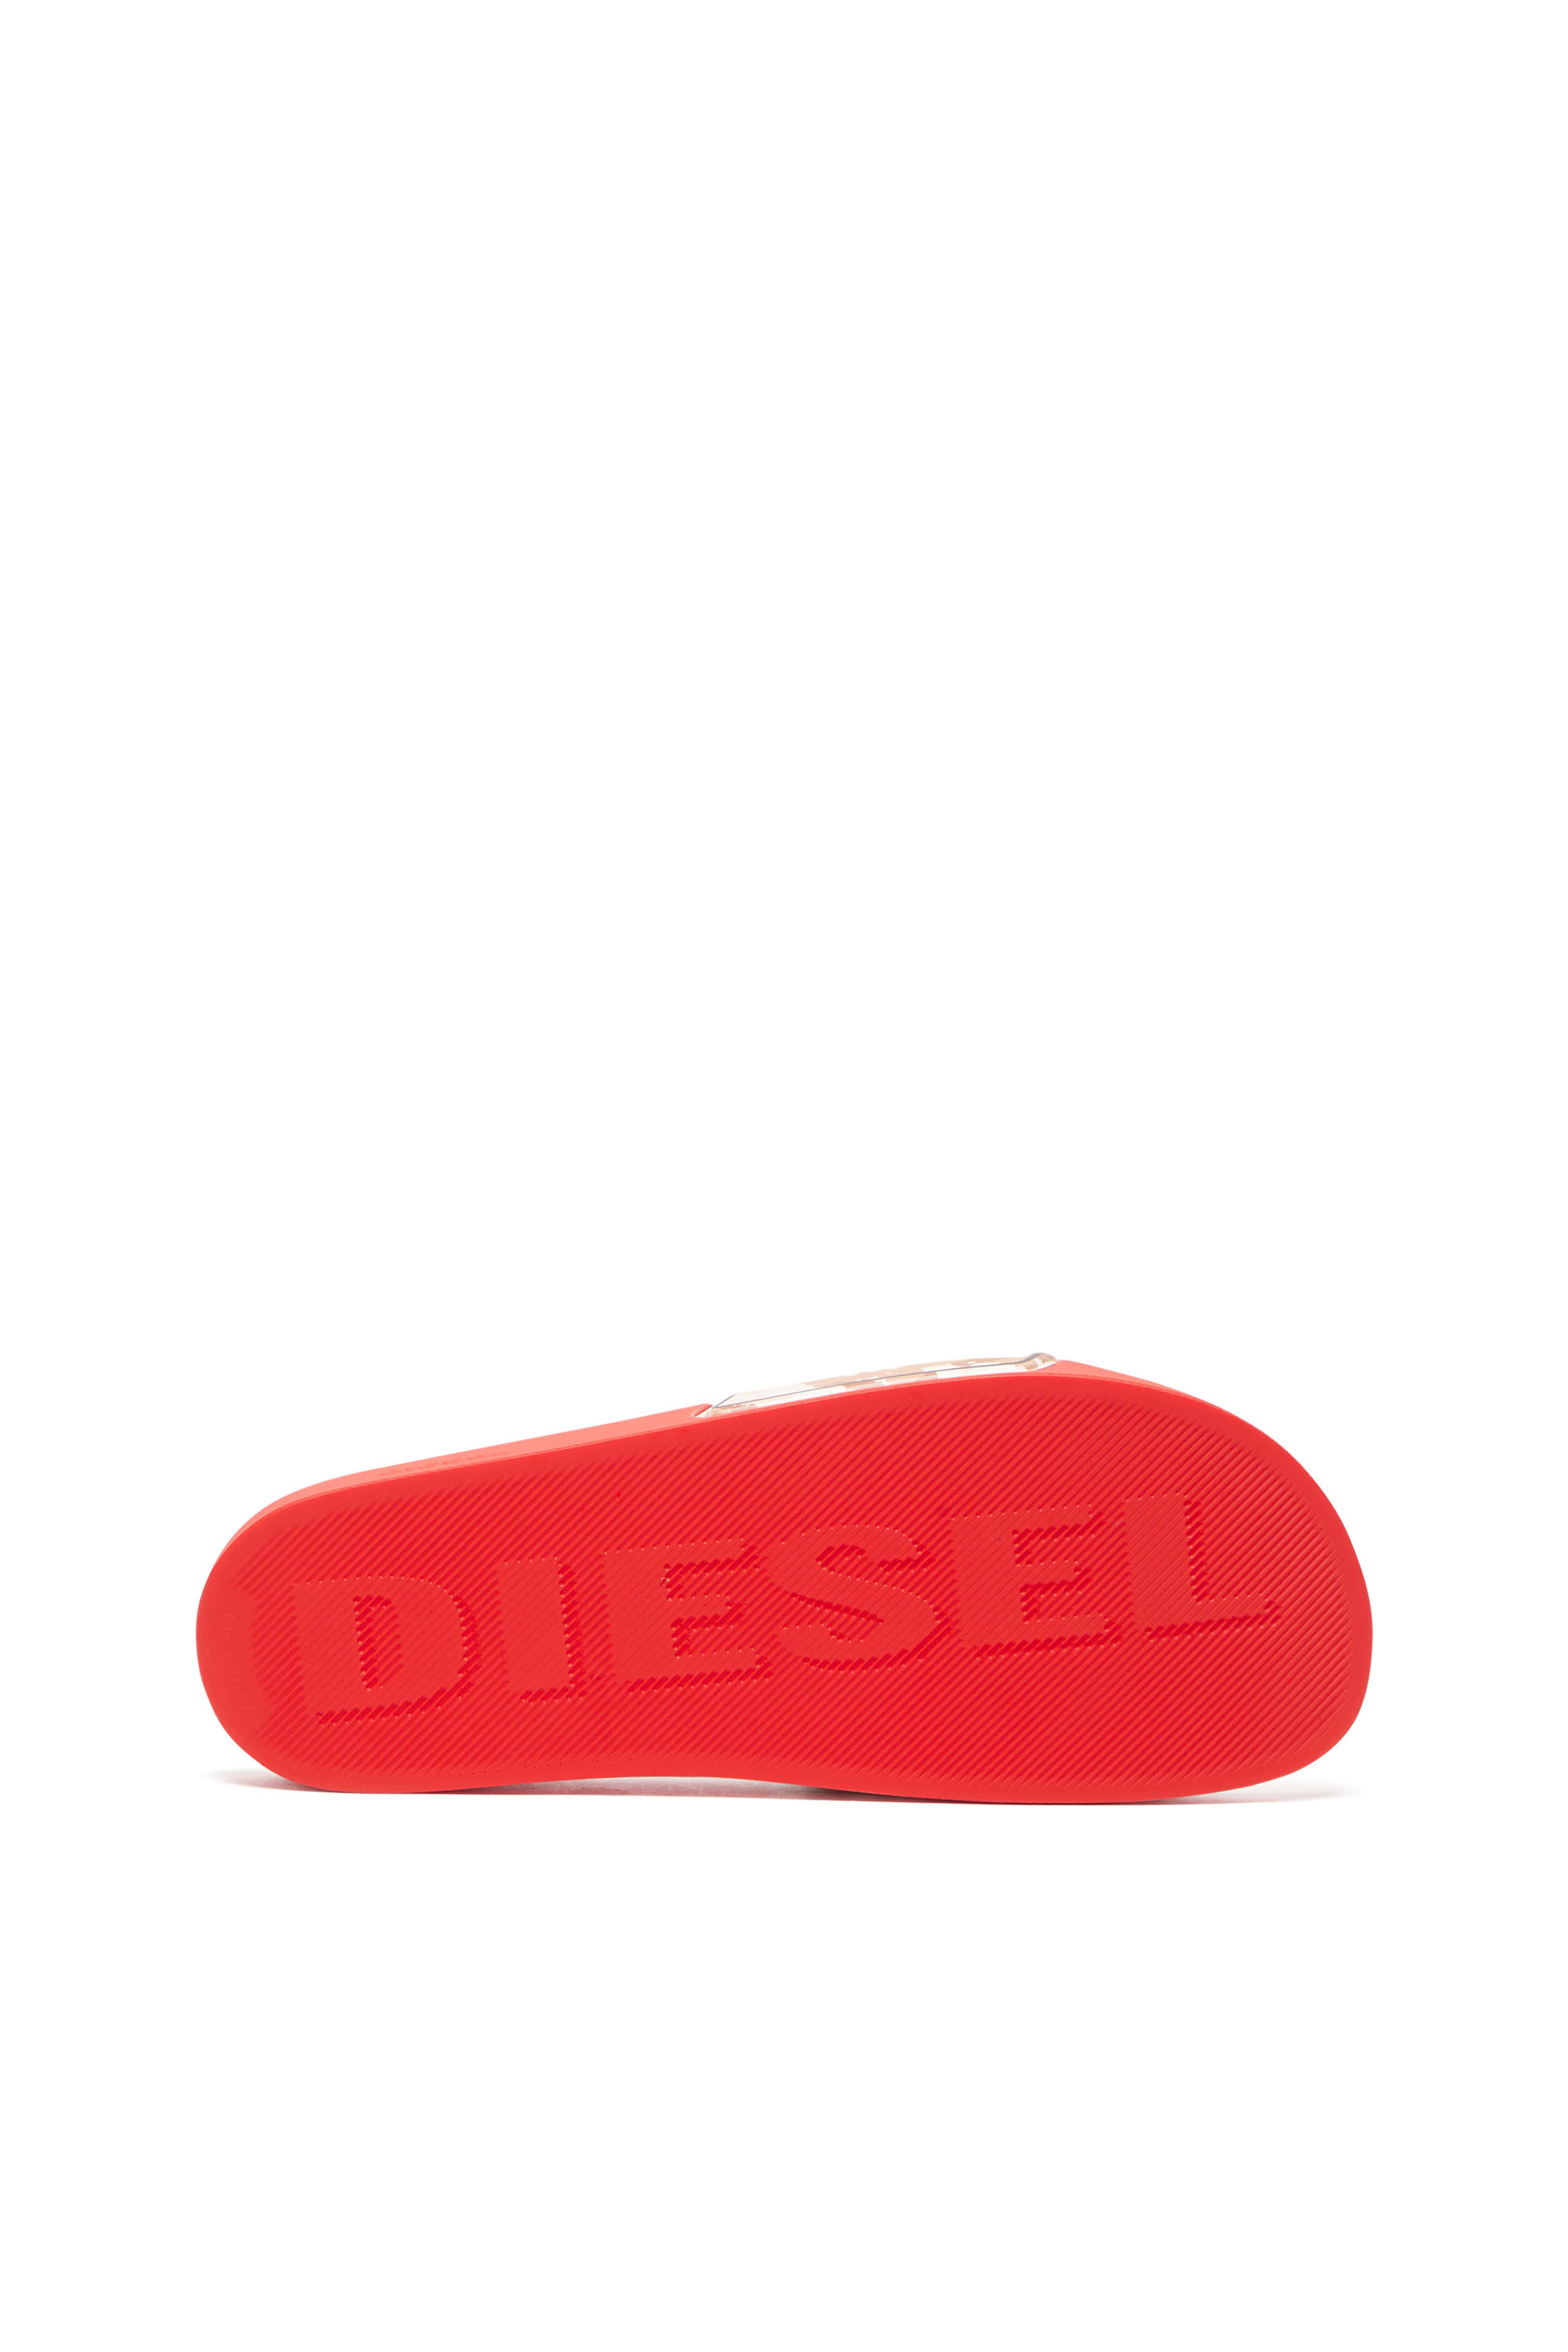 Diesel - SA-MAYEMI CC X, Red - Image 4